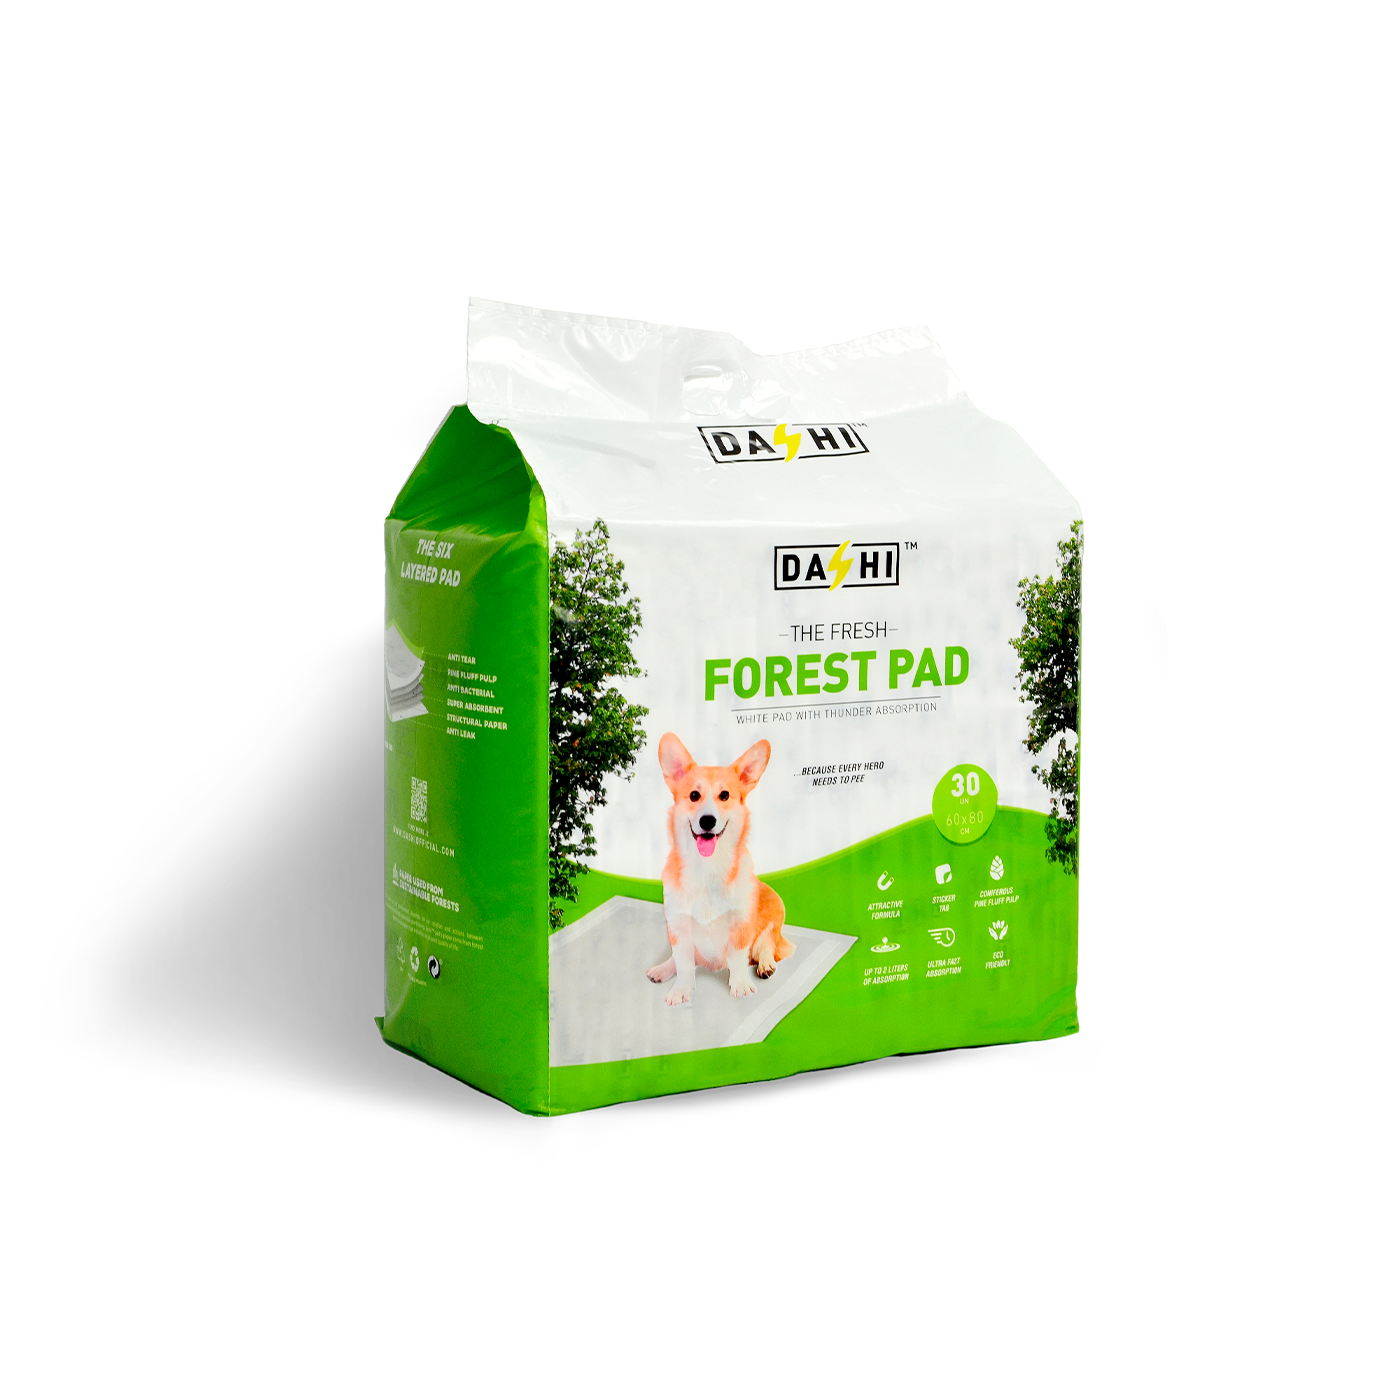 Dashi Forest Pad